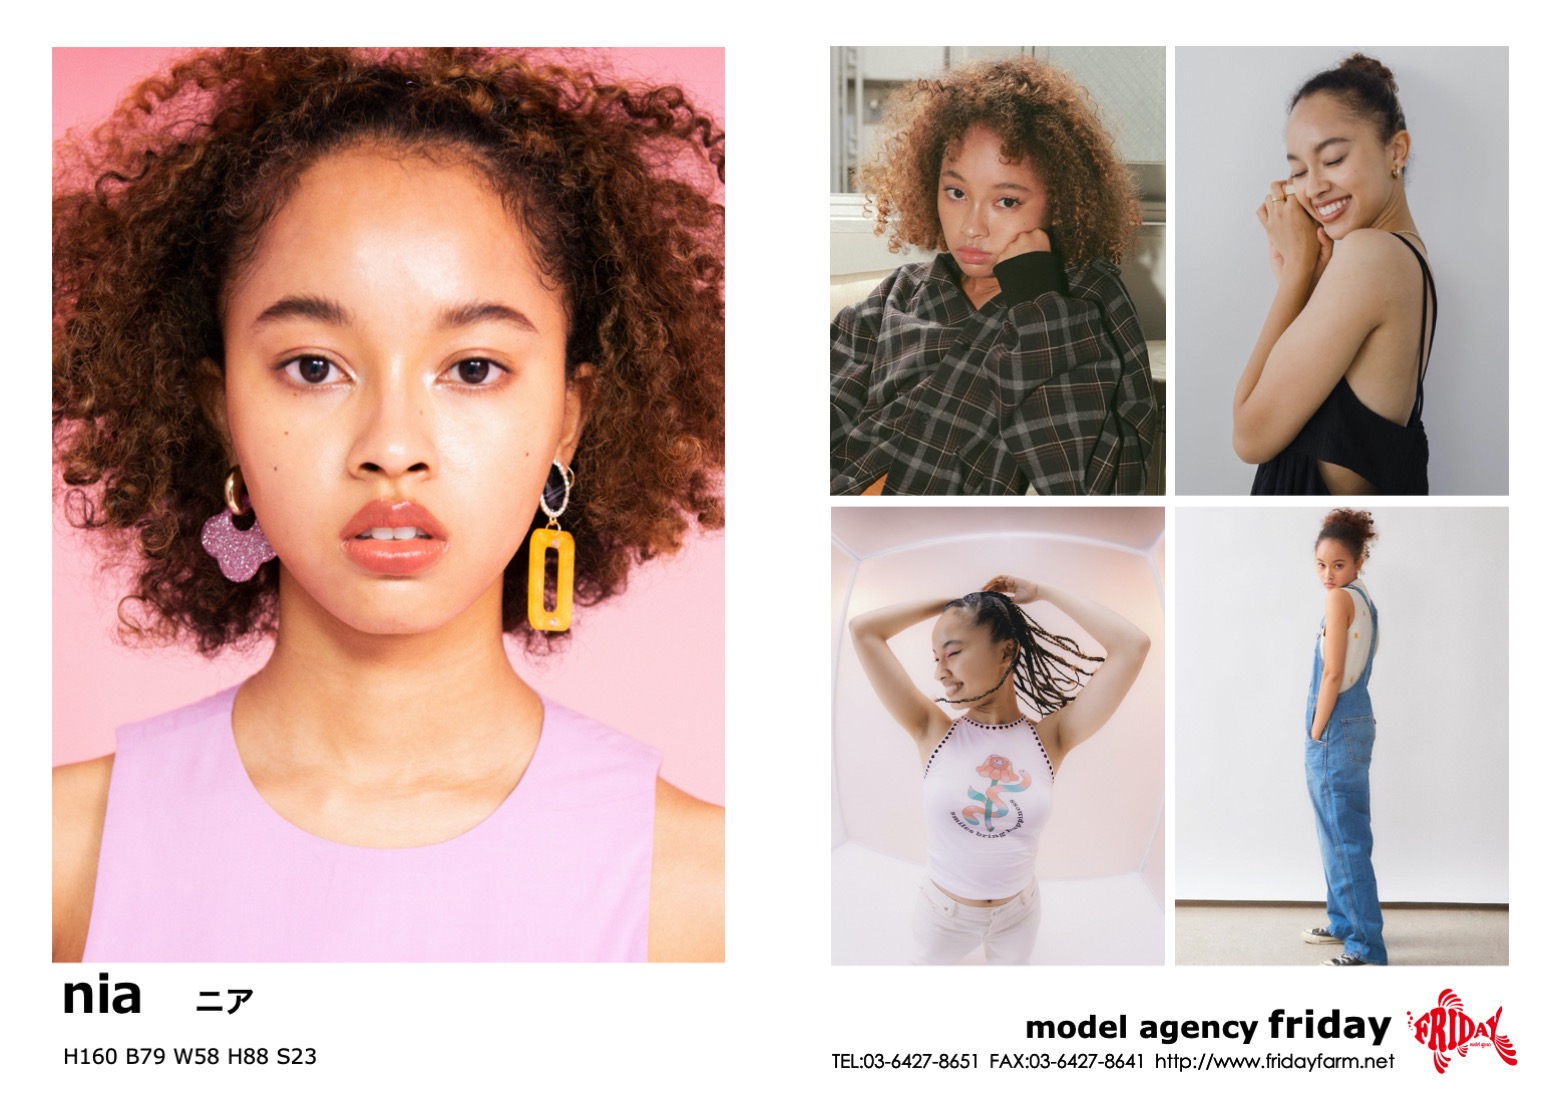 nia - ニア | model agency friday